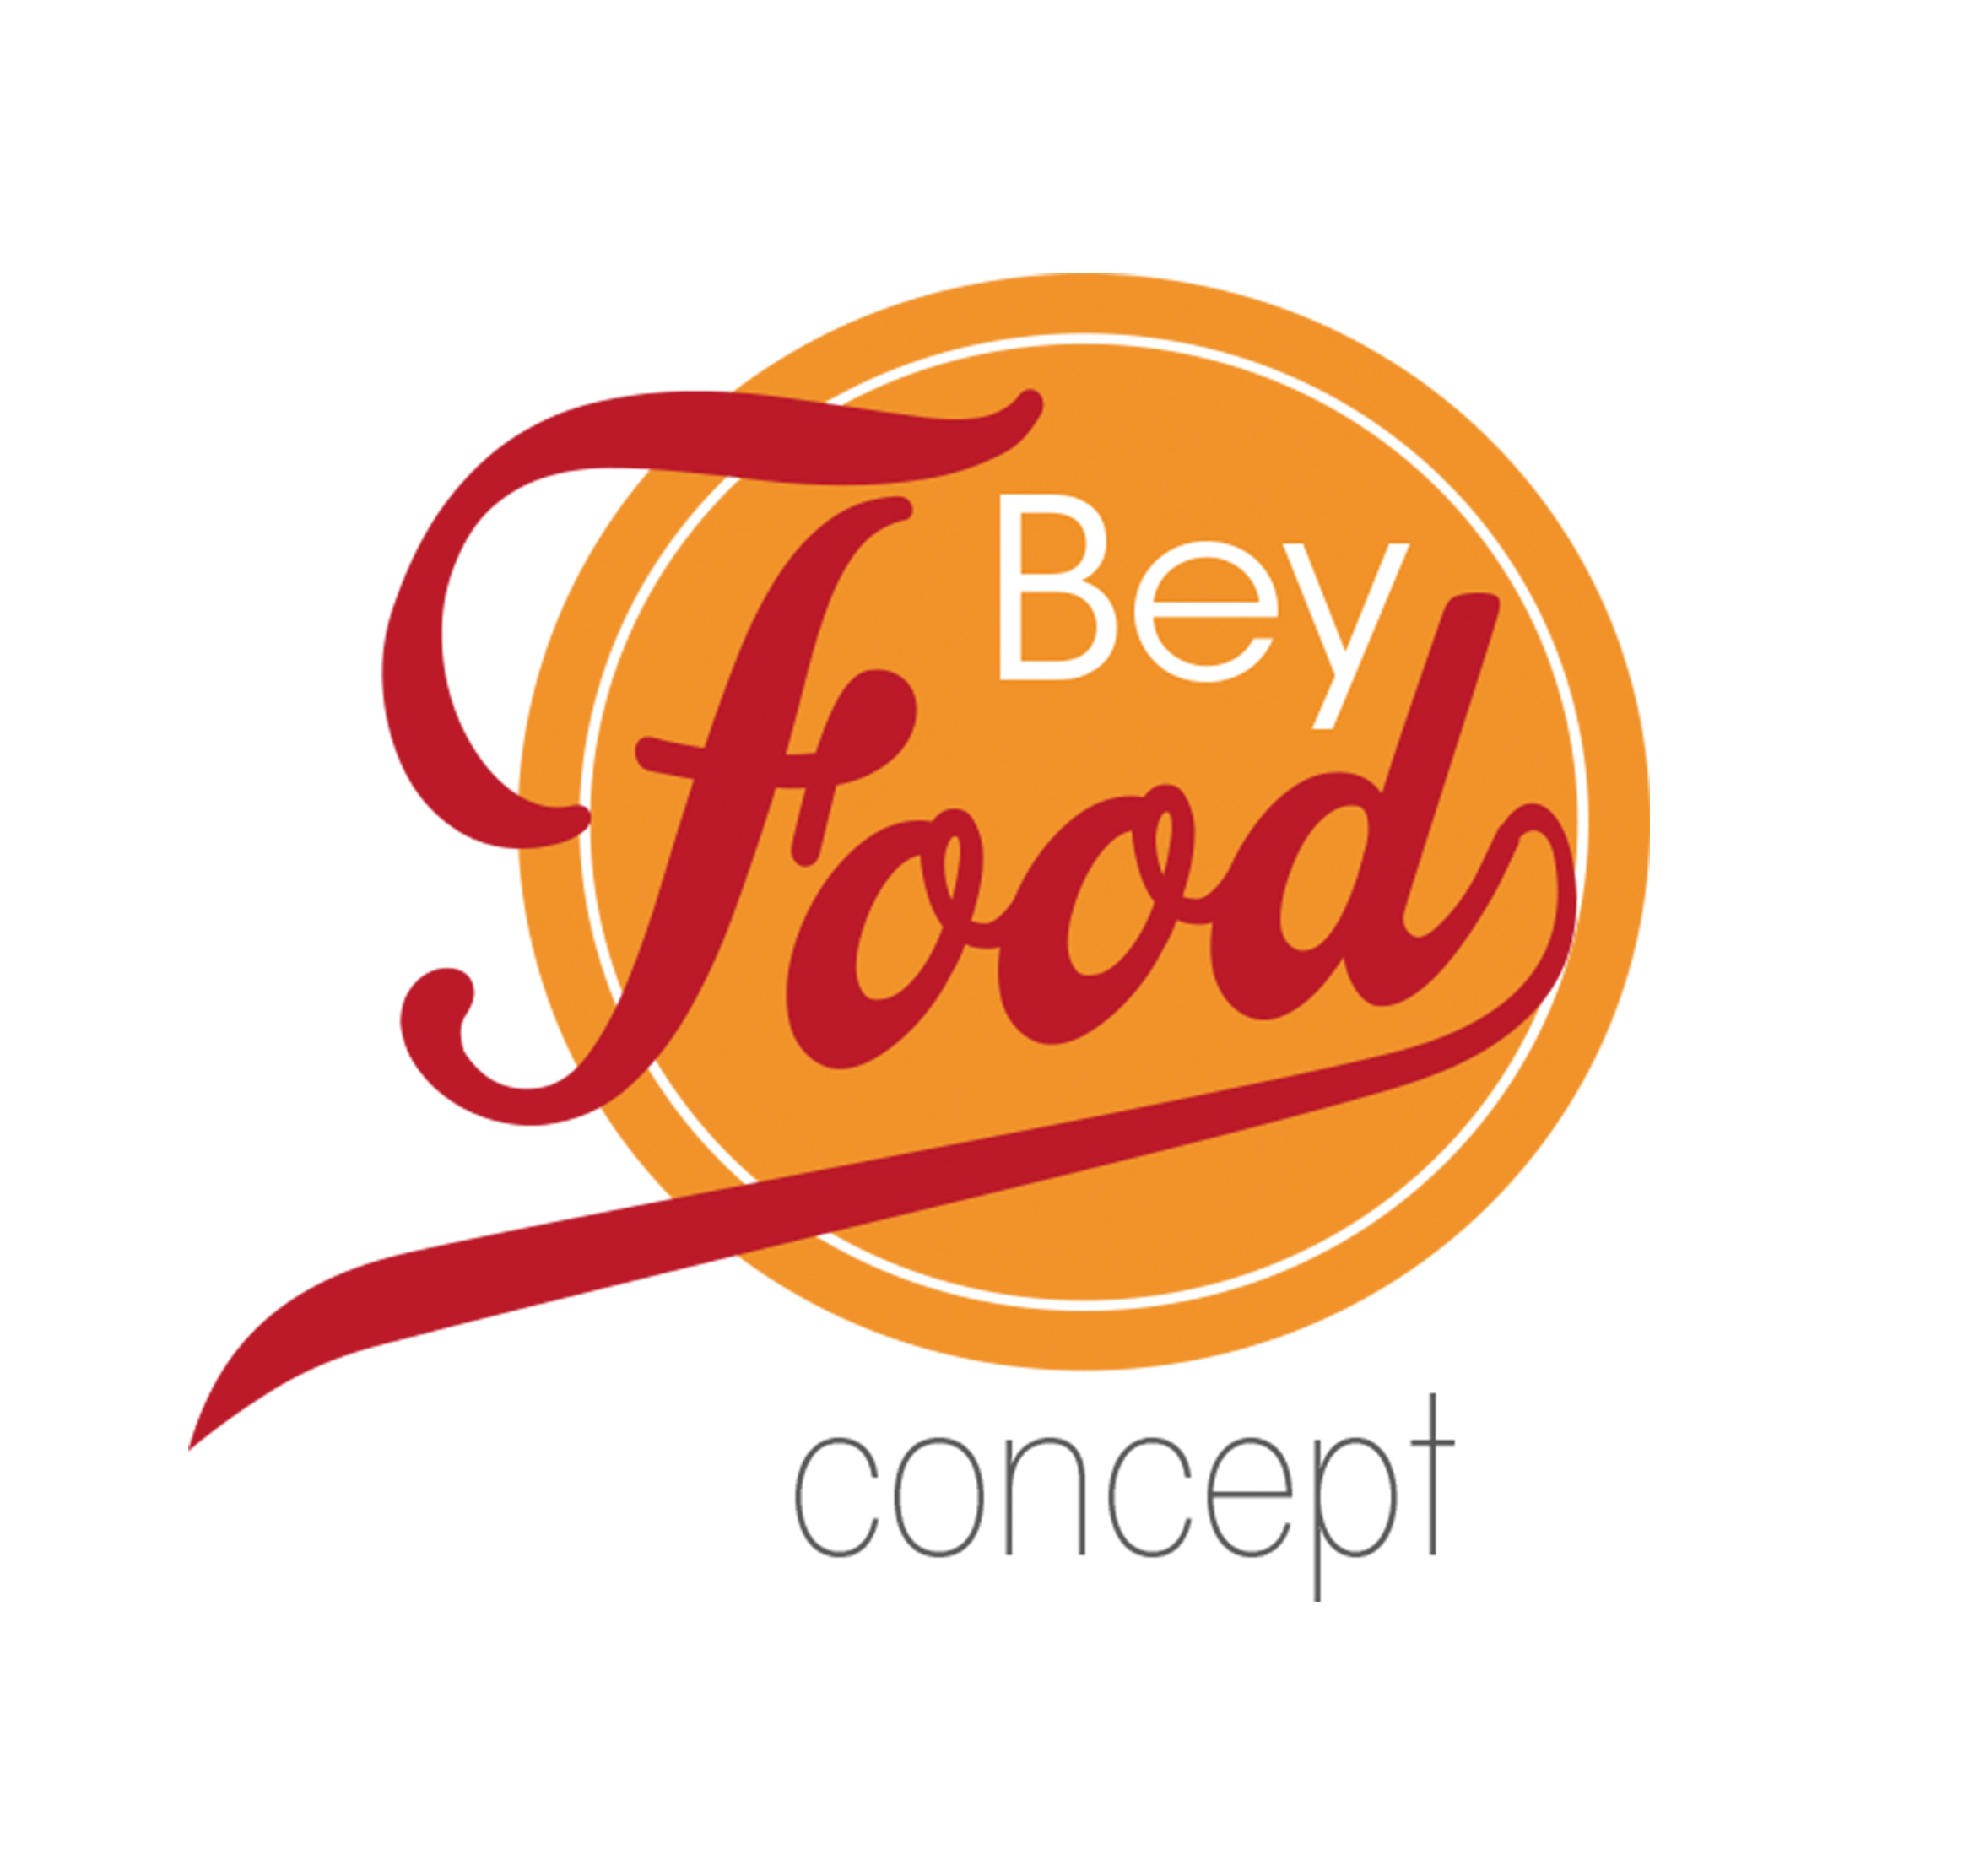 Bey Food concept